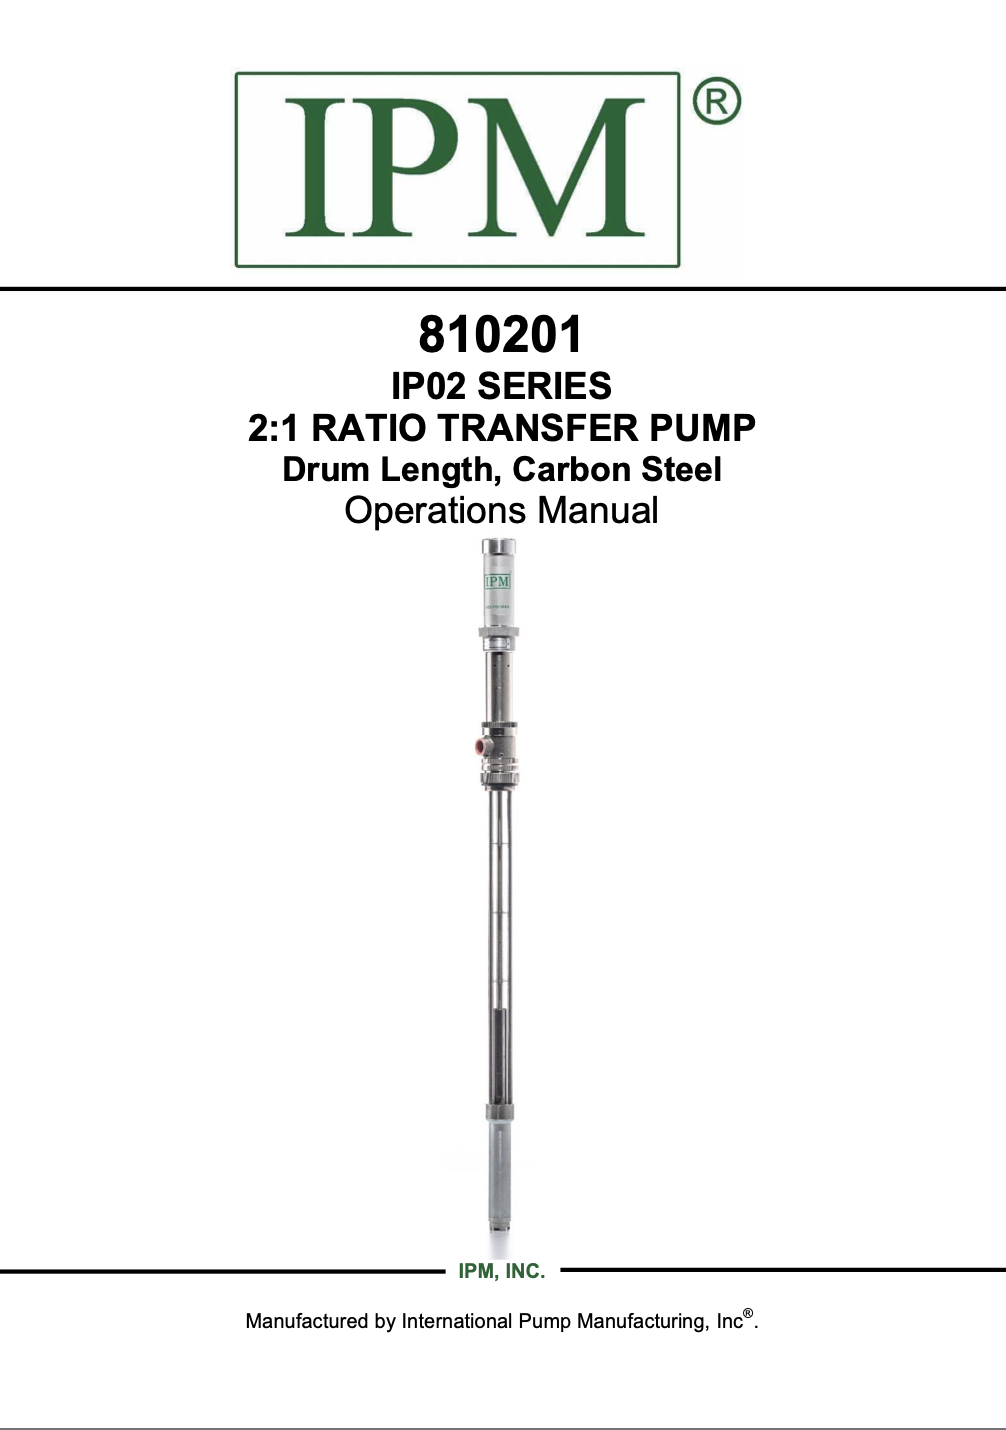 IPM IP02 Series 2:1 Ratio Transfer Pump Operation Manual, Drum Length, Carbon Steel